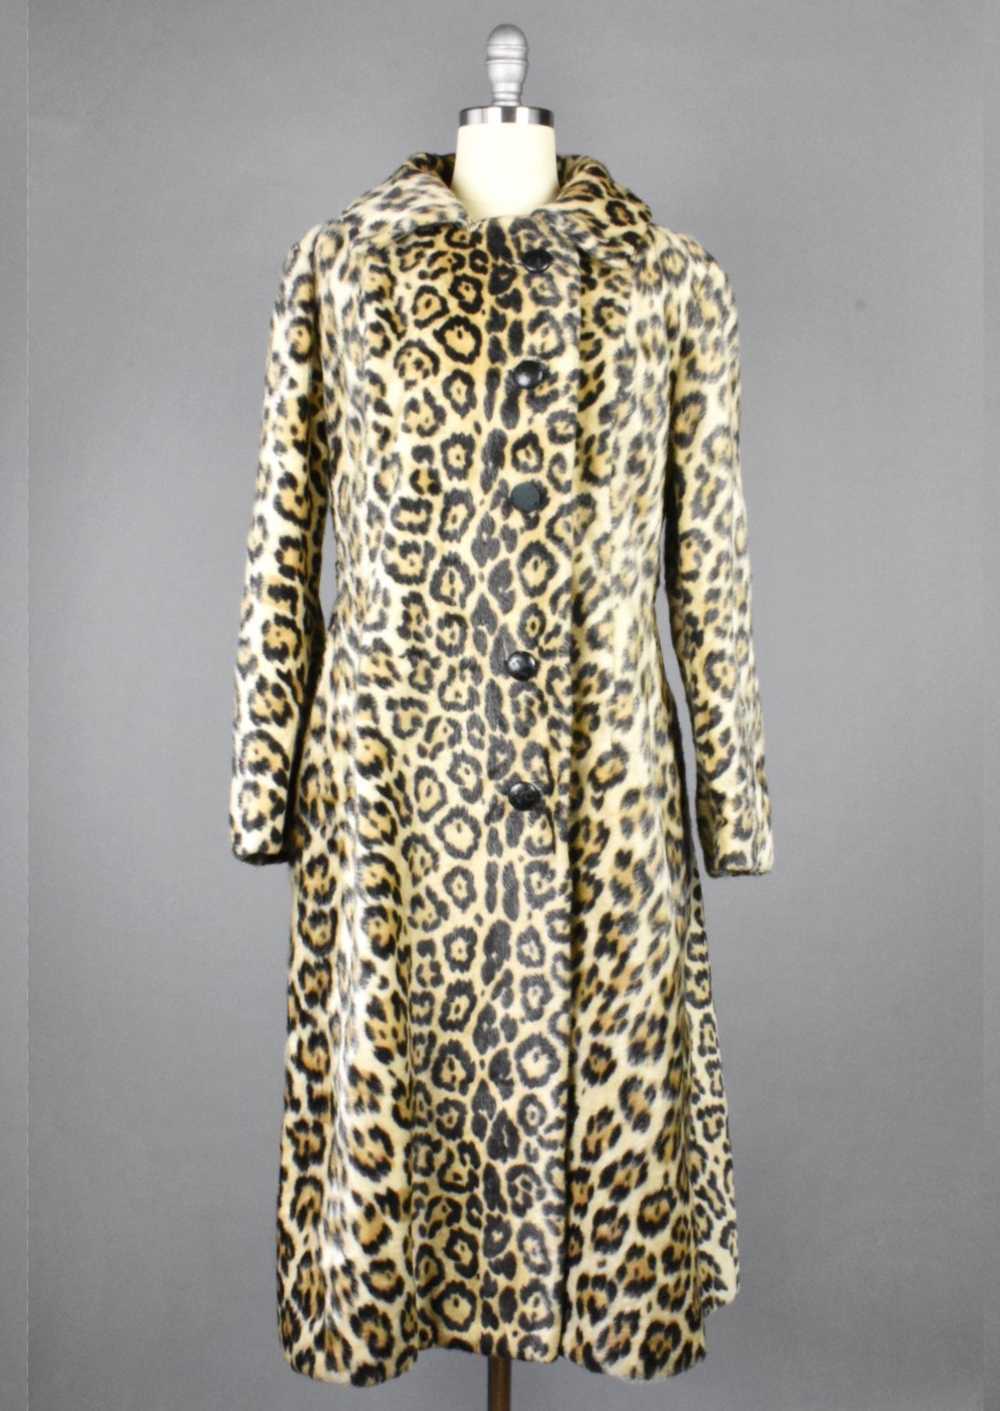 Leopard Print Faux Fur Coat by Safari - image 11